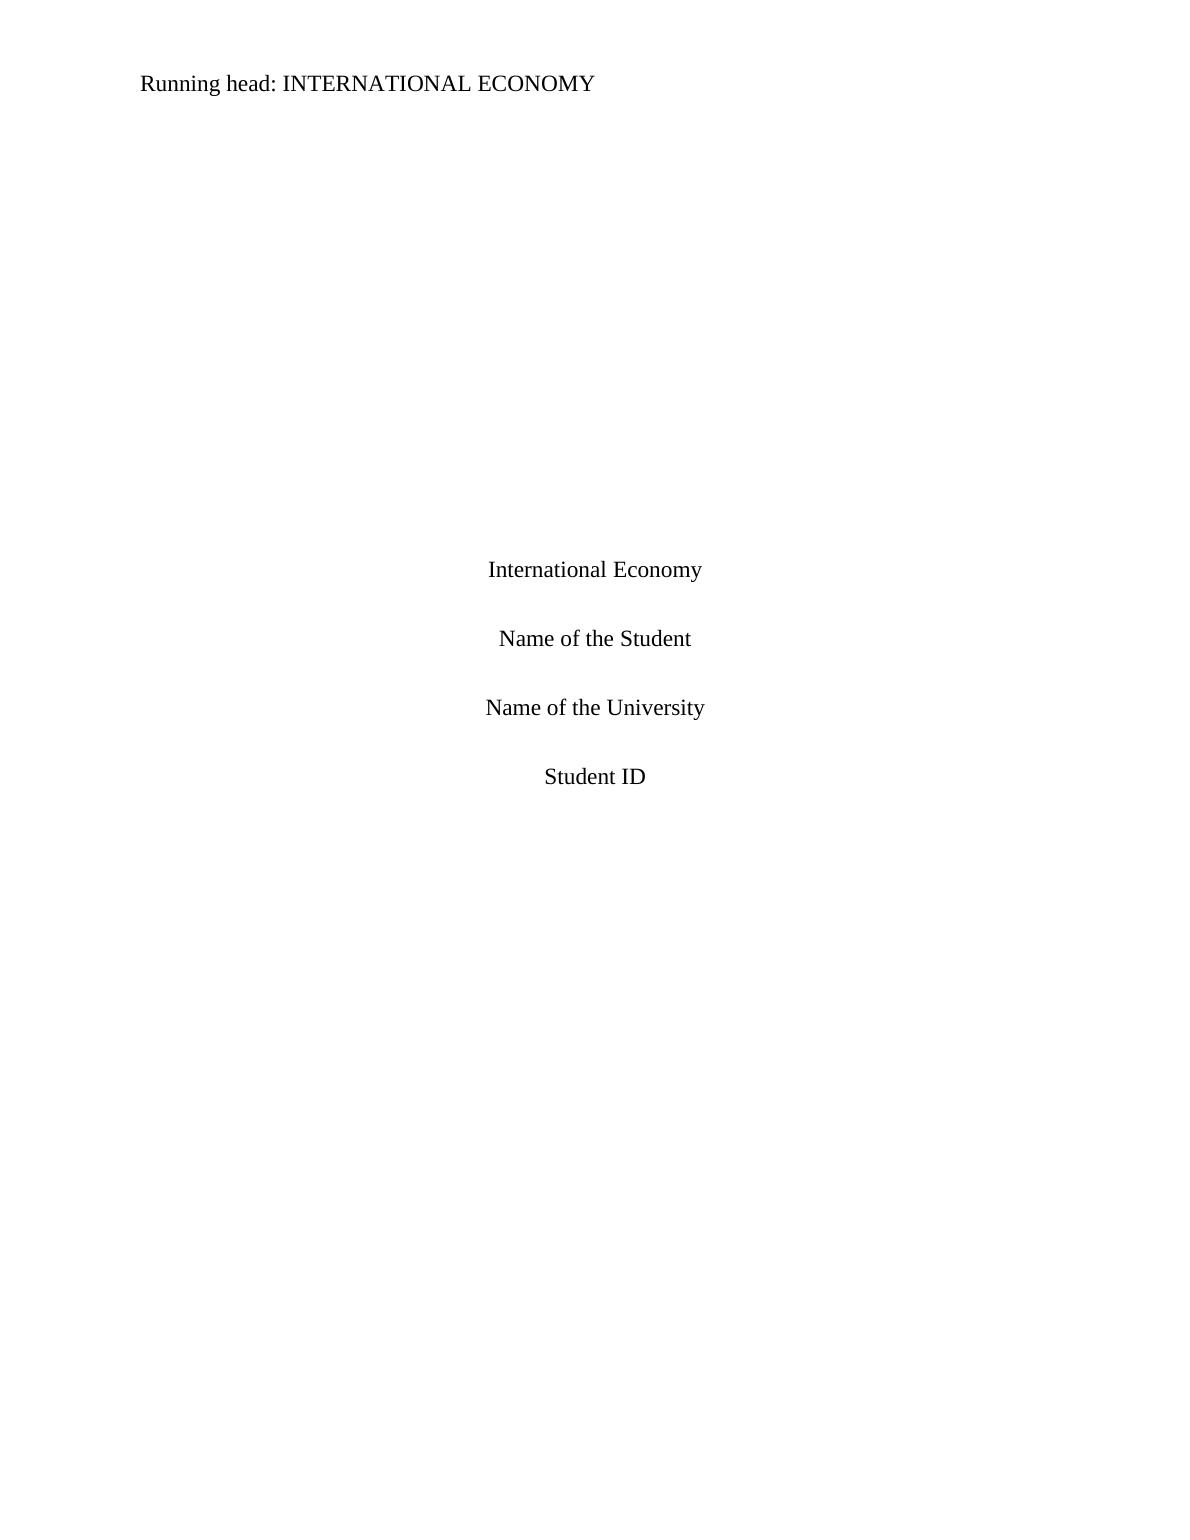 International Economy Analysis Report_1